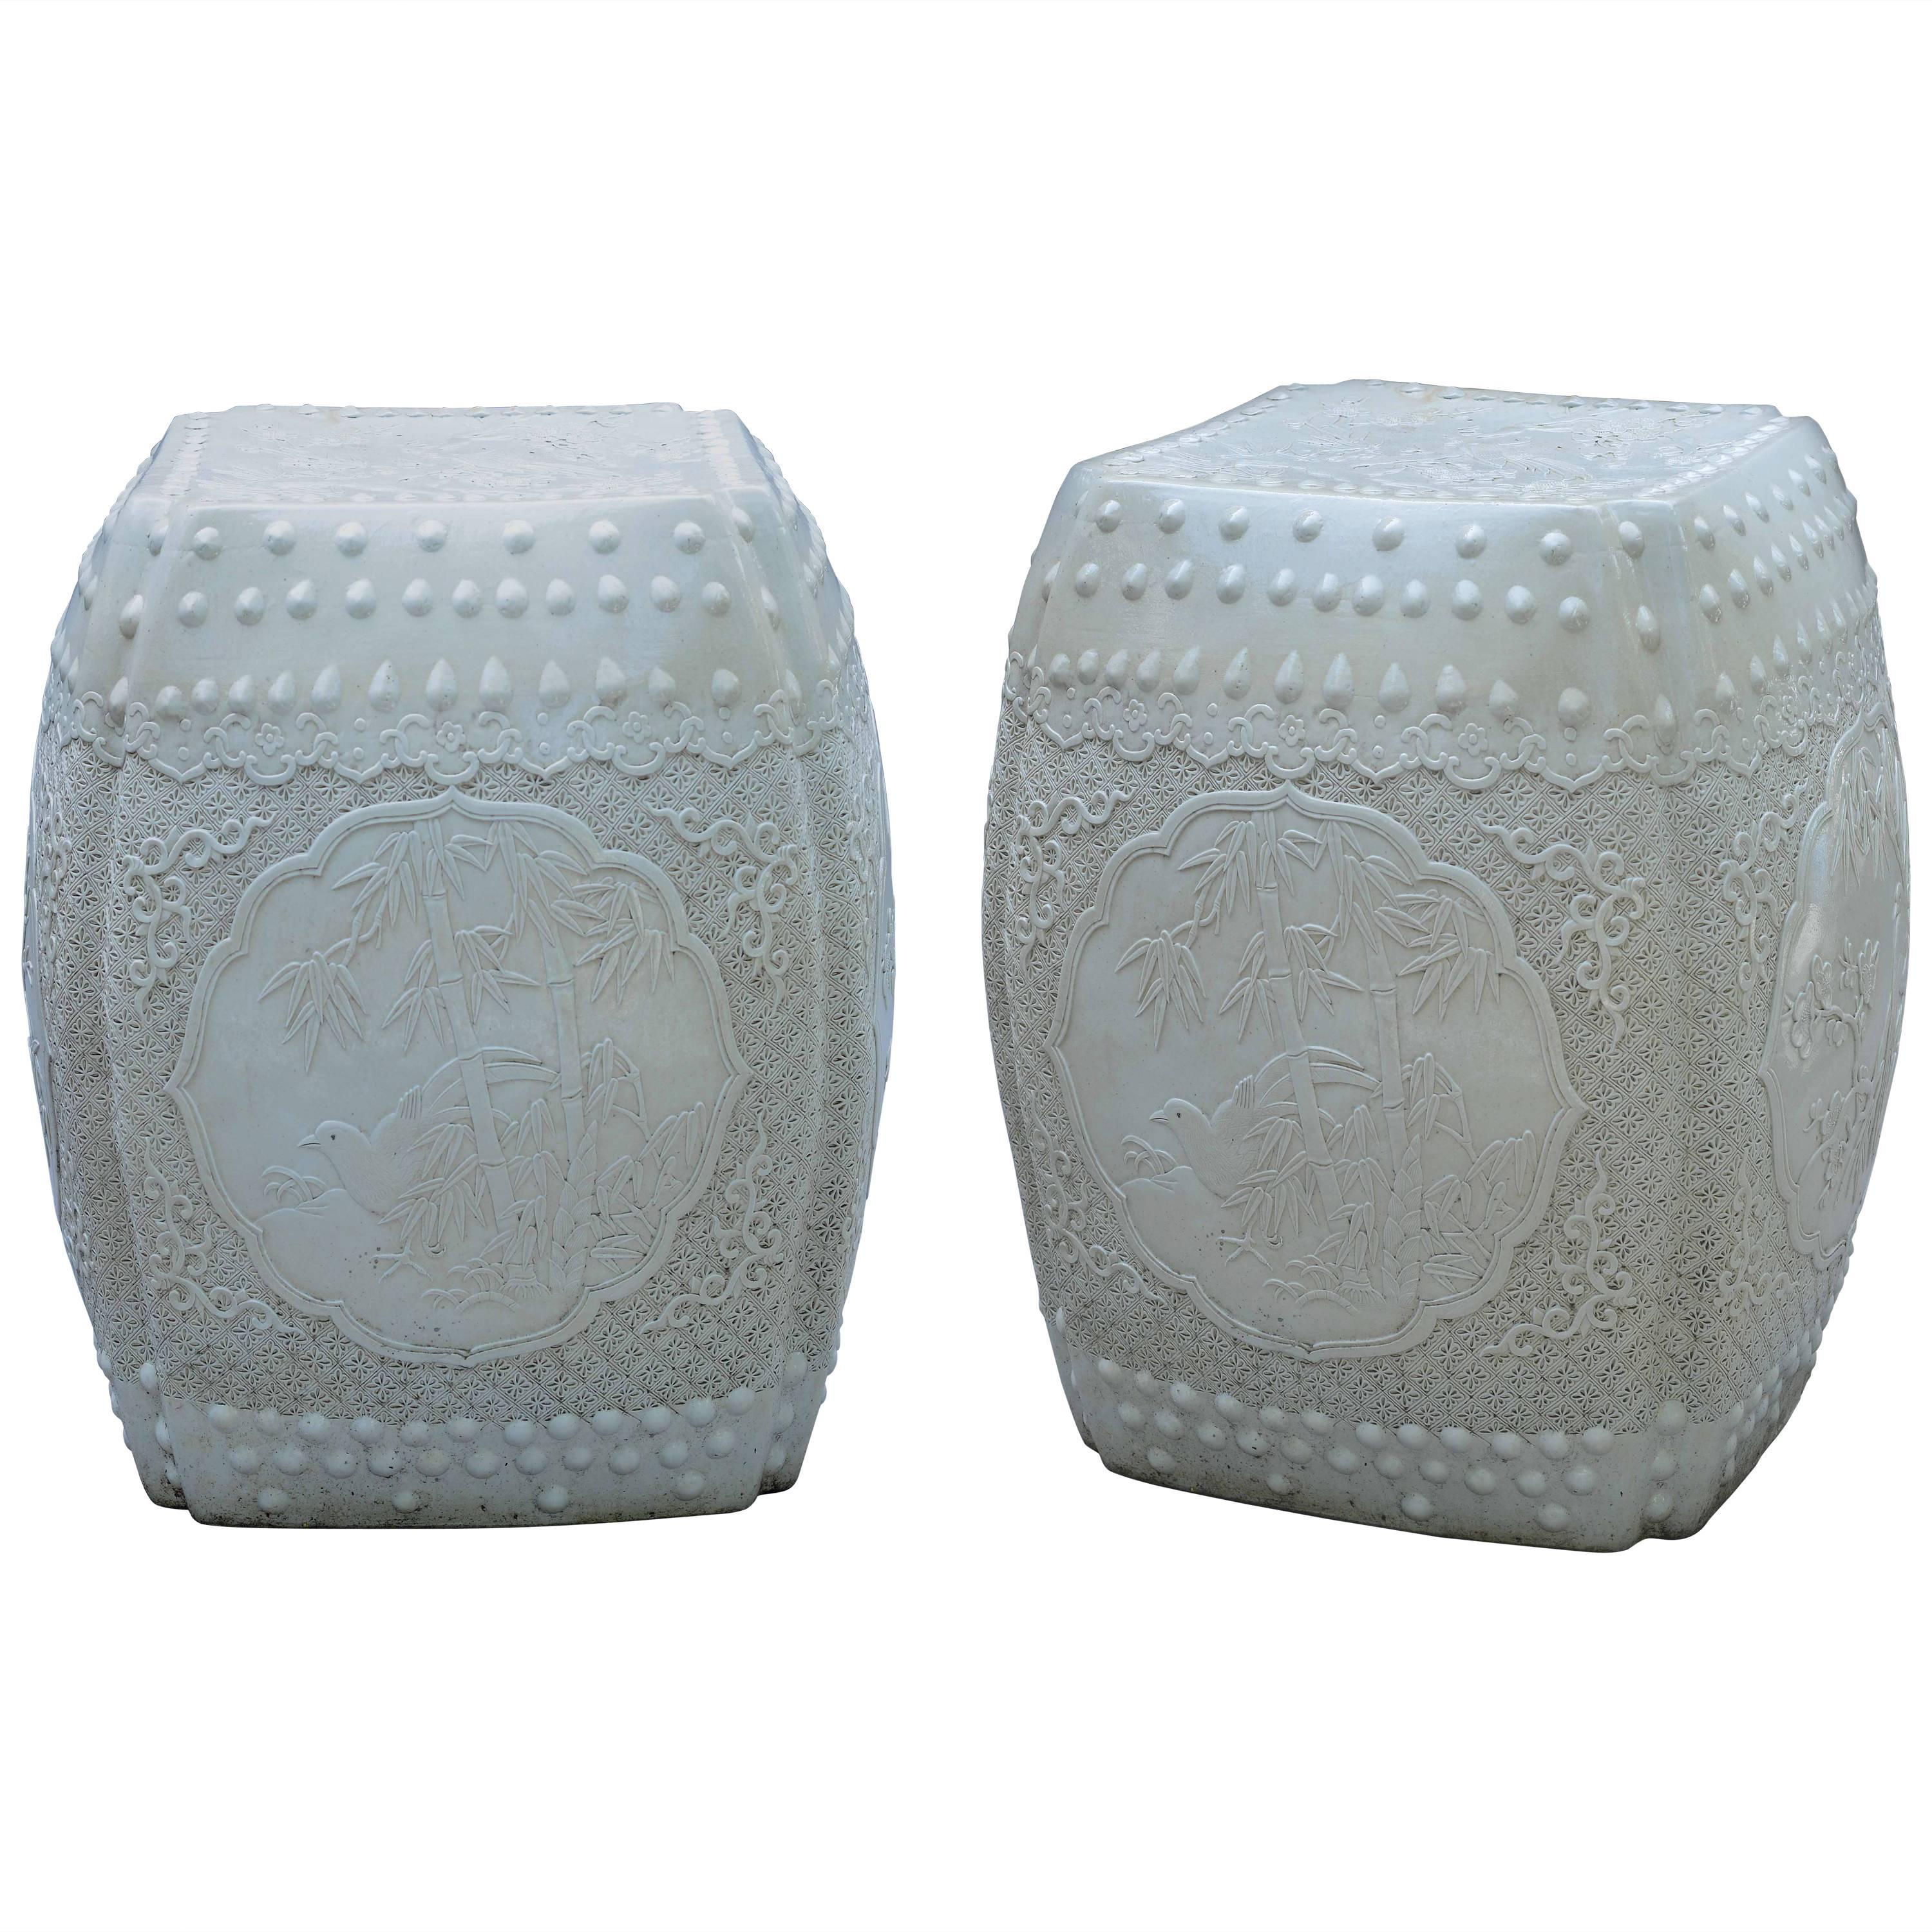 Pair of Fine Carved Porcelain Stools